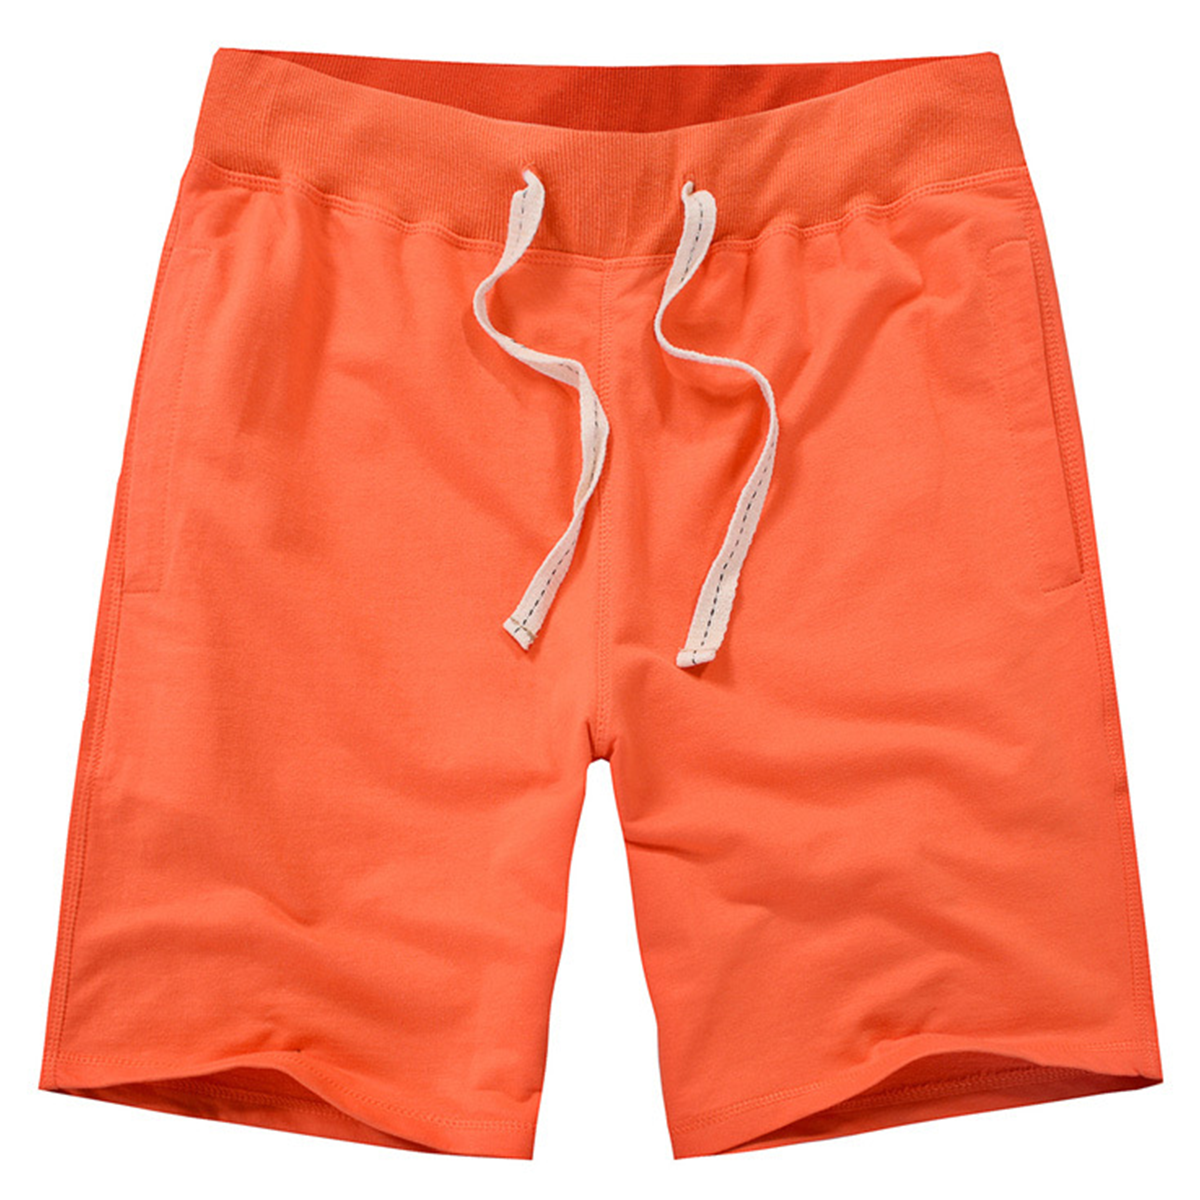 Pantalón deportivo casual de algodón de color sólido para hombre, pantalón corto de verano para playa